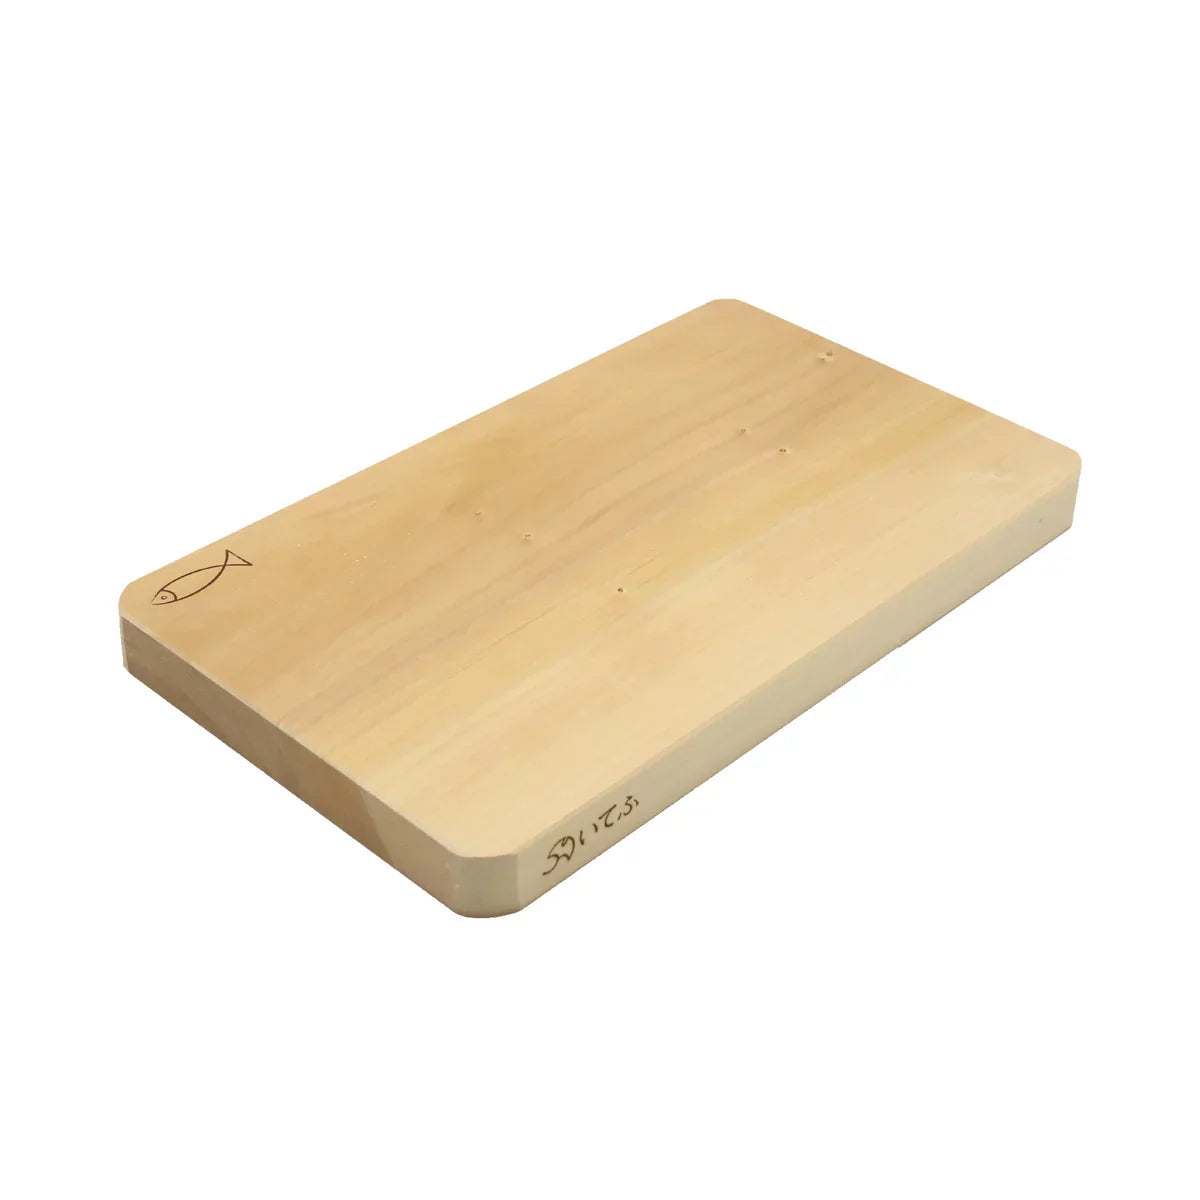 Kiya Ichou Gingko Wood Natural Wooden Cutting Board